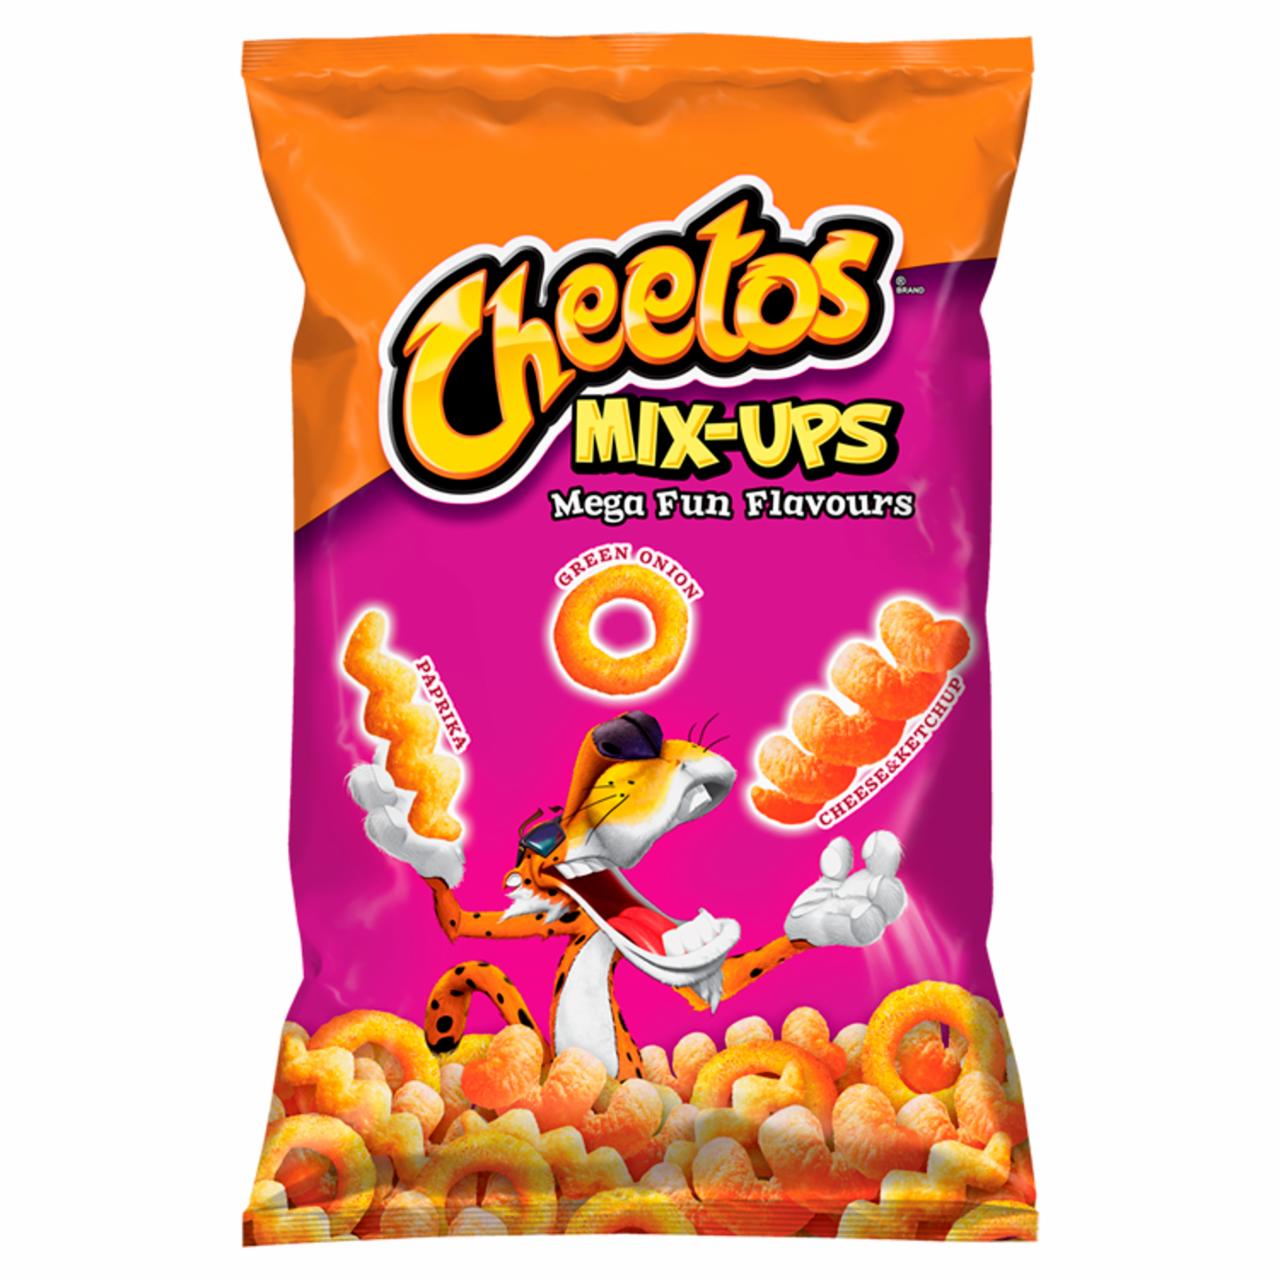 Zdjęcia - Cheetos Mix-Ups Mega Fun Flavours Mieszanka chrupek kukurydzianych 70 g